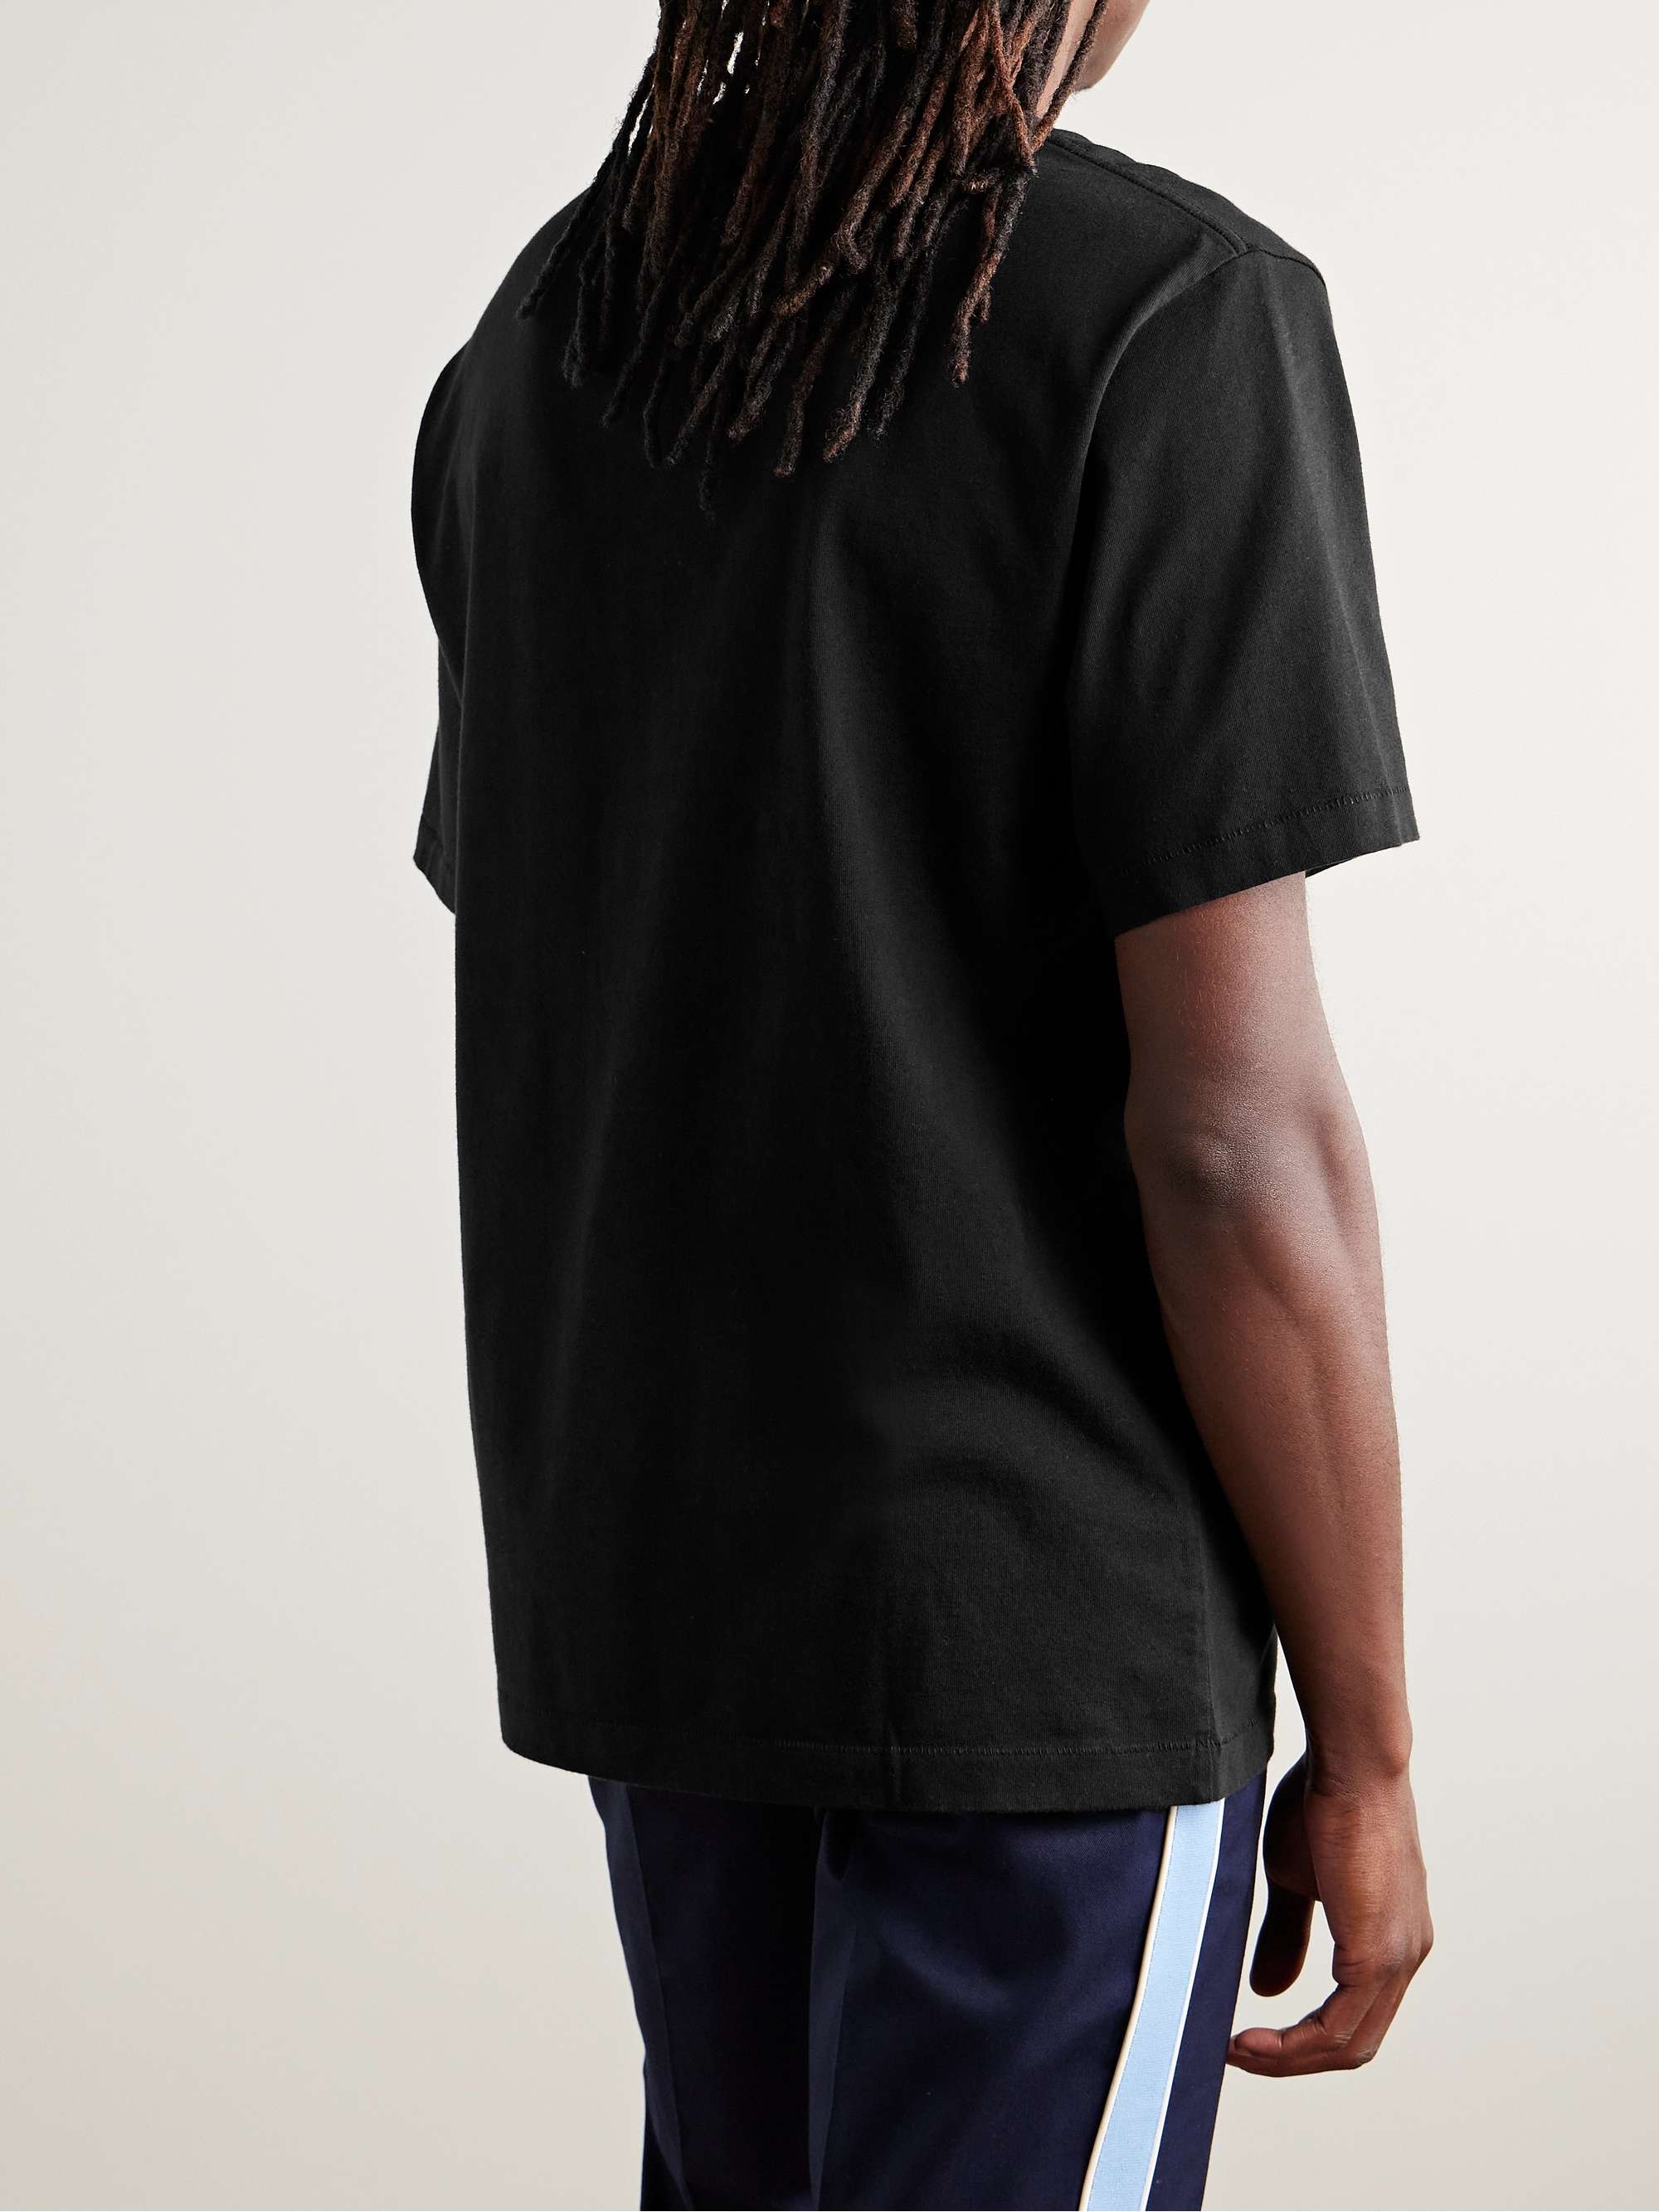 KENZO Appliquéd Logo-Embroidered Cotton-Jersey T-Shirt for Men | MR PORTER